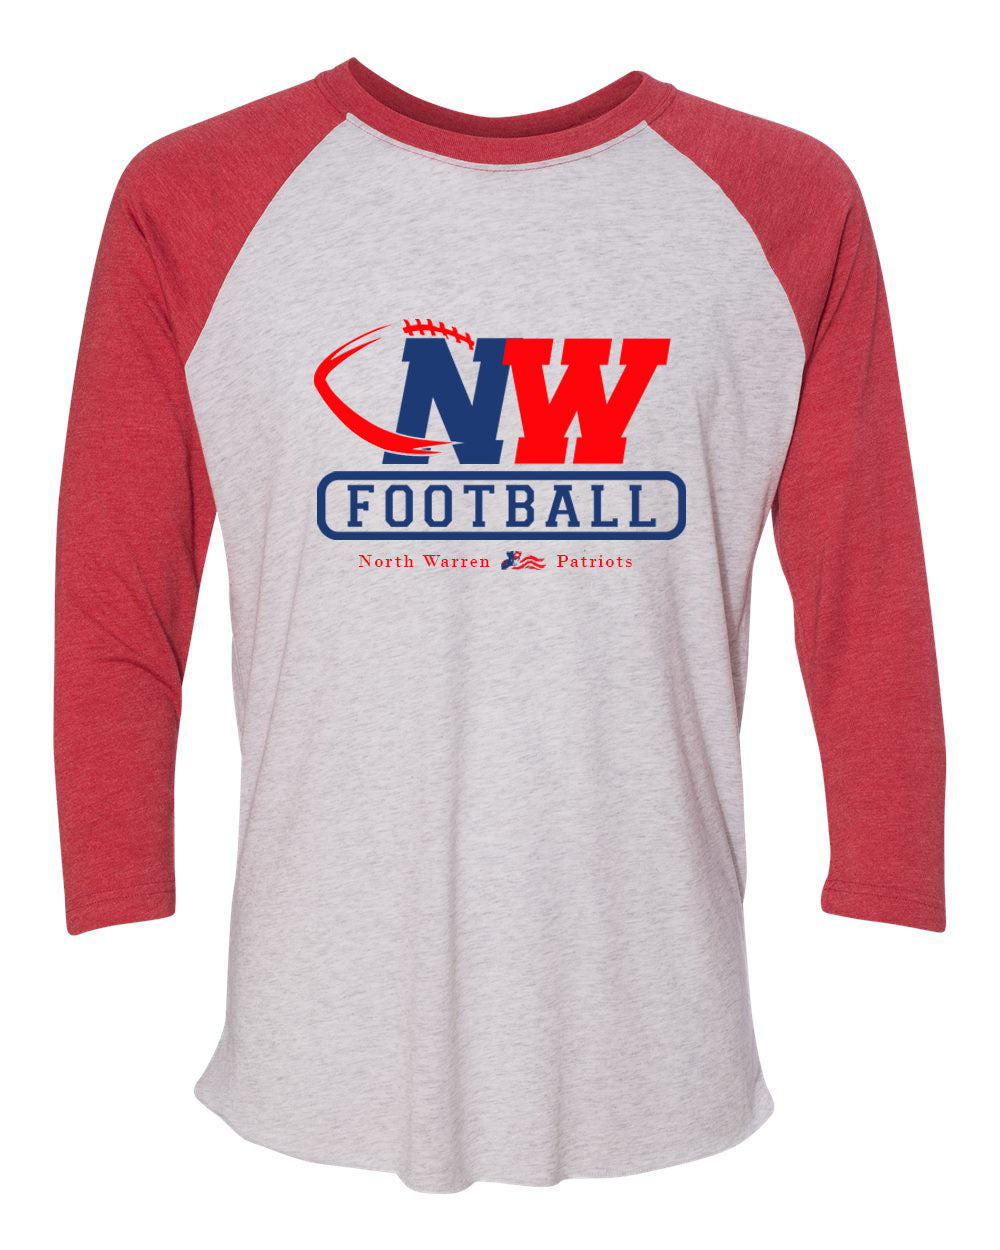 NW Football design 3 raglan shirt